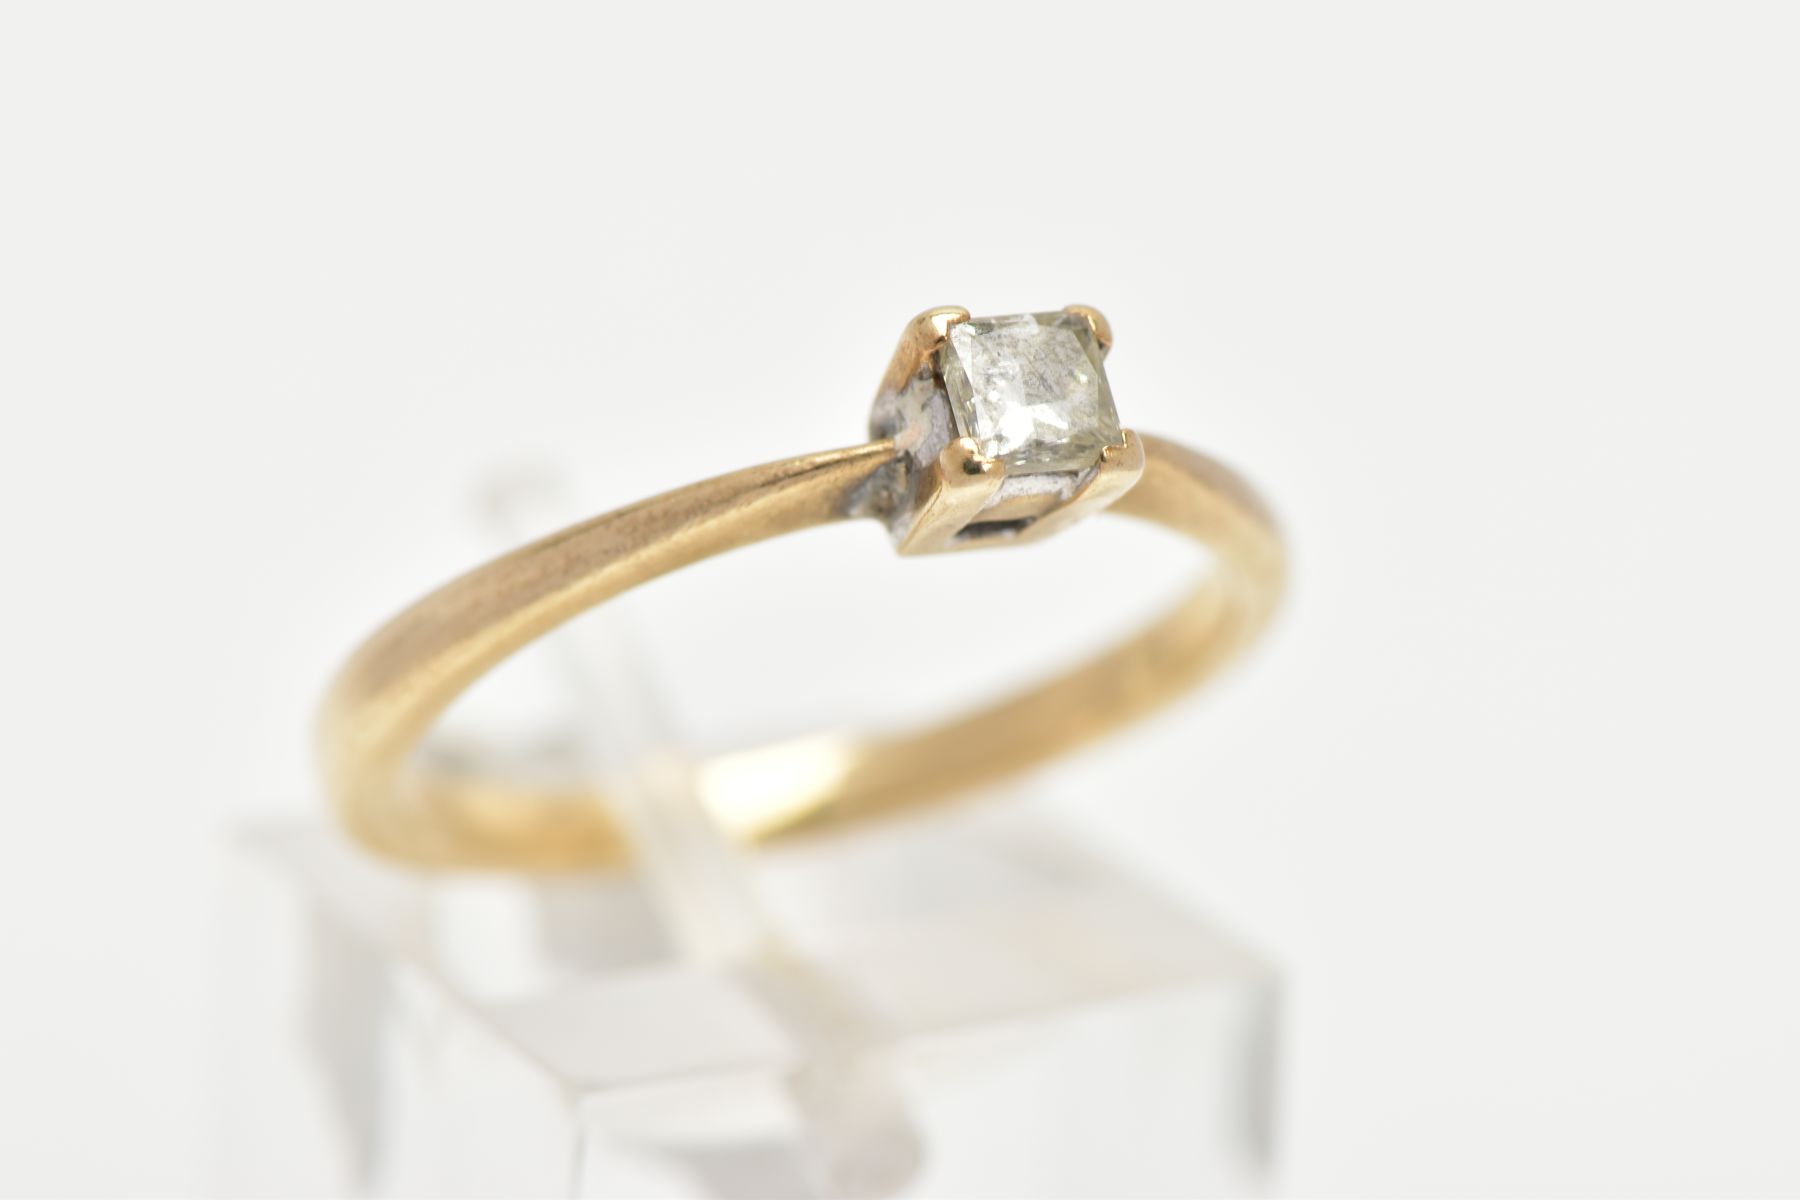 A YELLOW METAL SINGLE STONE DIAMOND RING, four claw set princess cut diamond, stamped diamond weight - Image 4 of 4